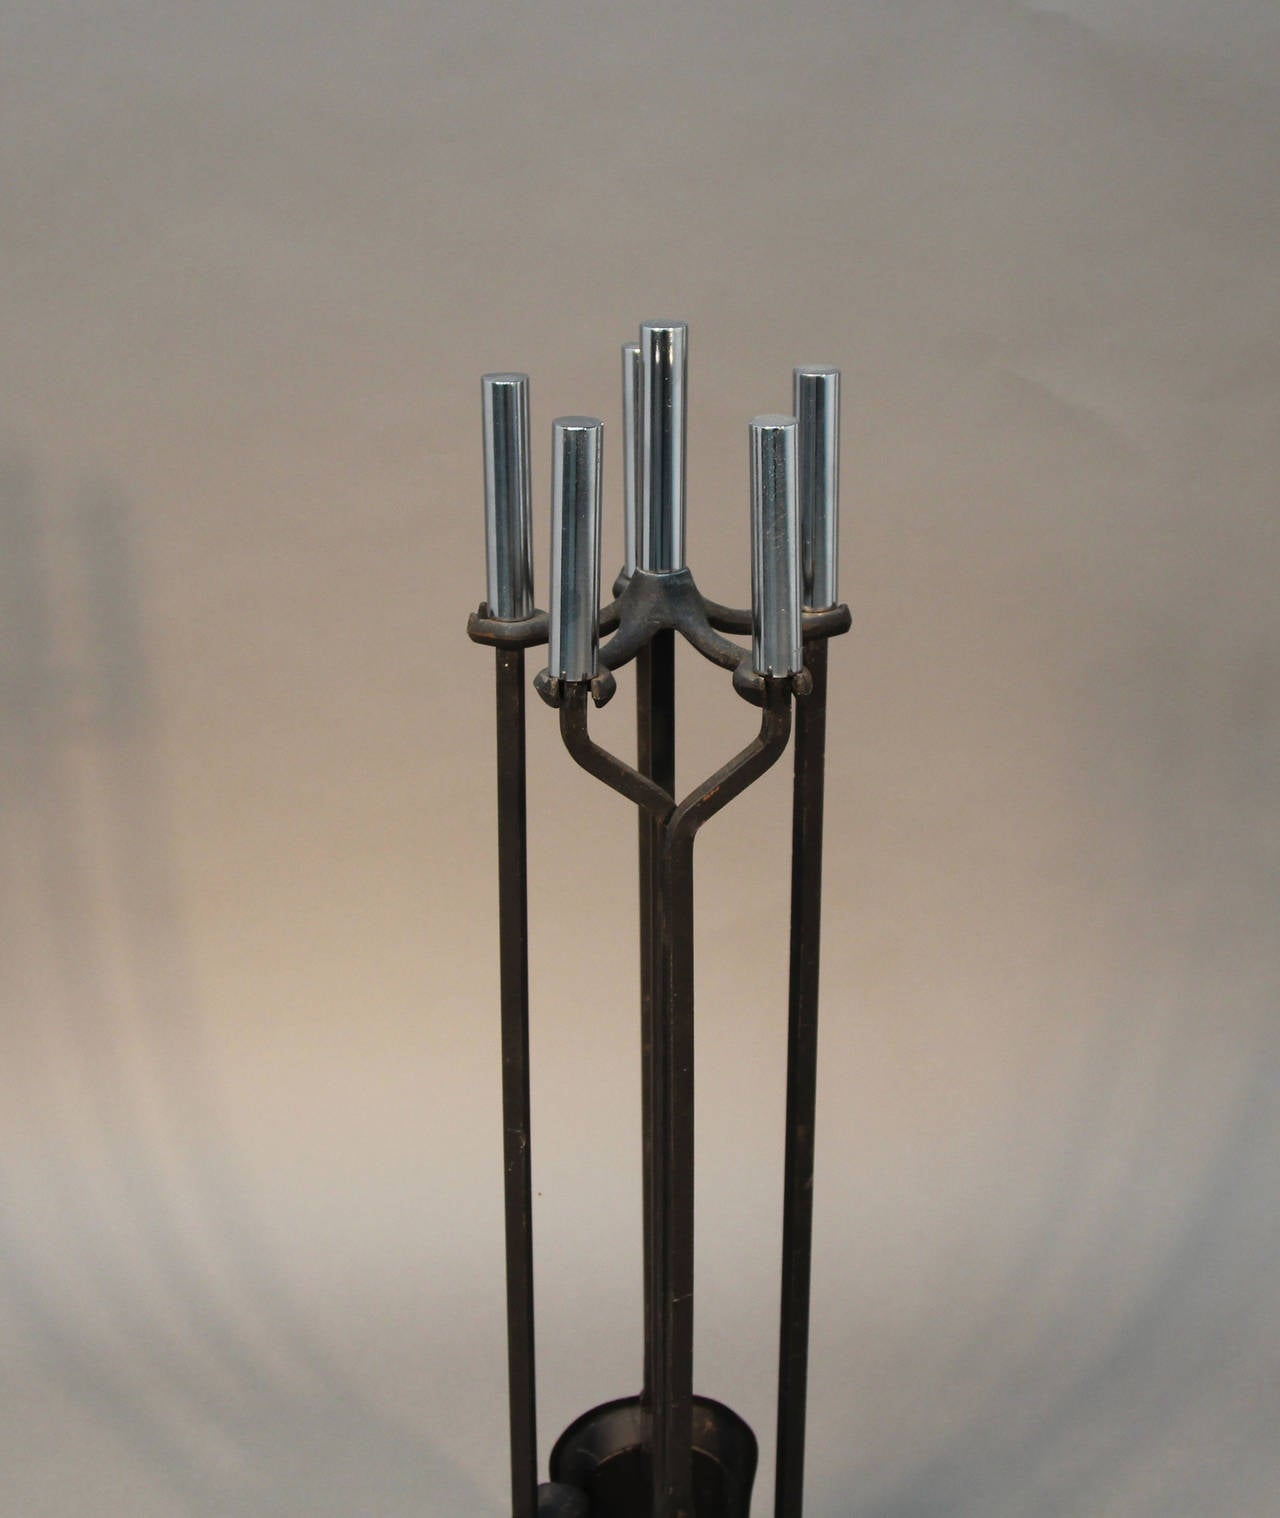 Set of chrome handled modern fireplace tools. Iron with polished chrome handles.